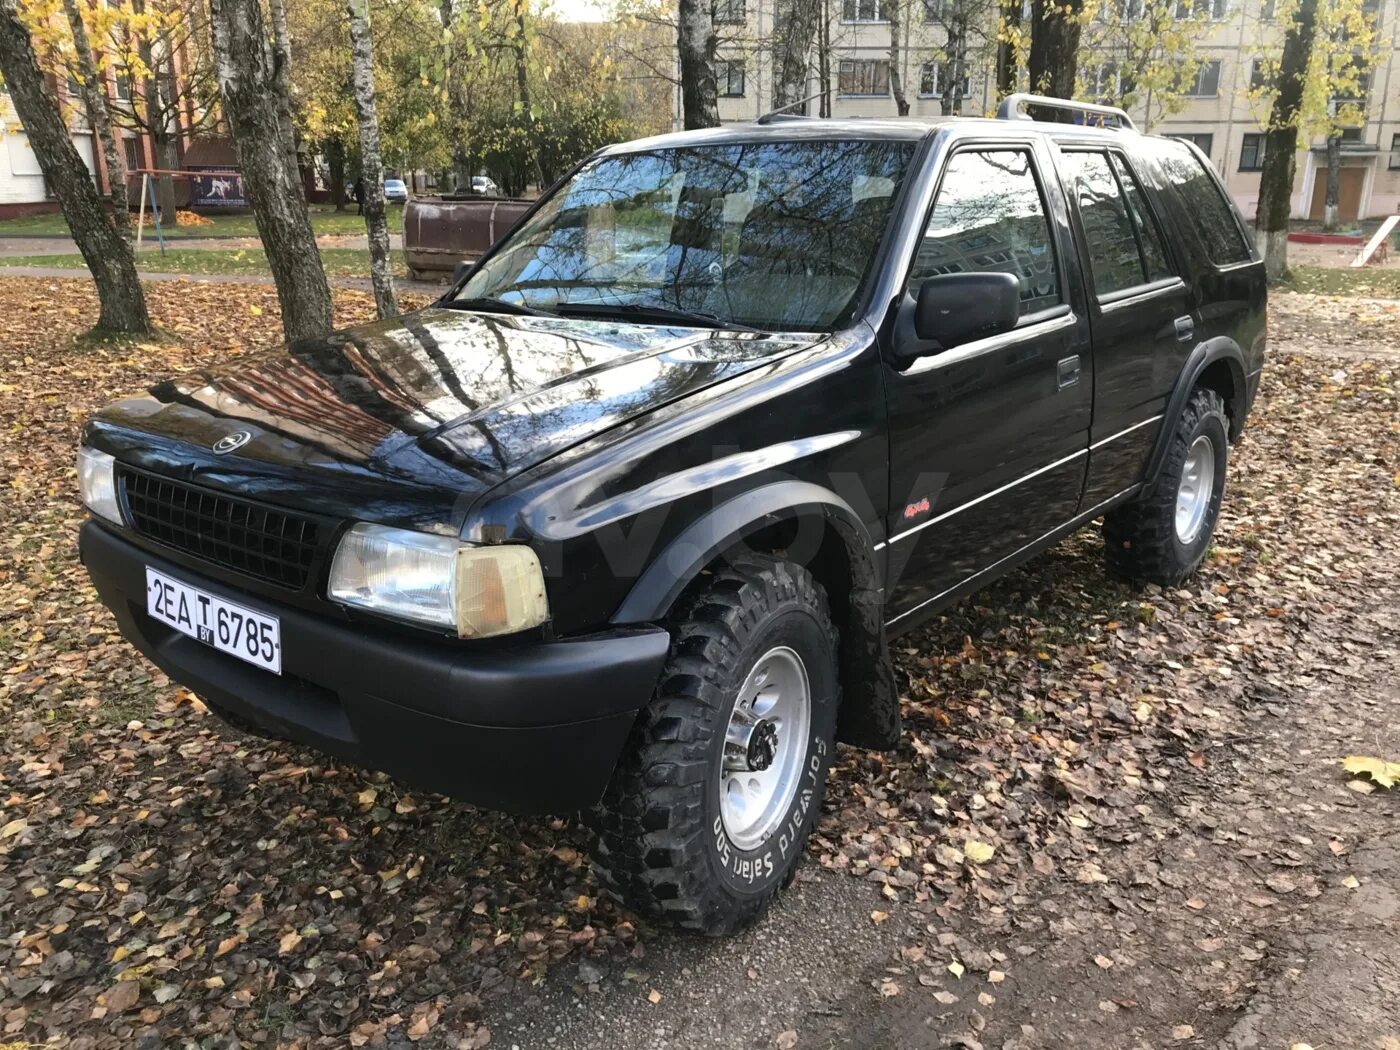 Opel Frontera 1993. Опель Фронтера а 1993г. Opel Frontera Diesel. Опель Фронтера 2.3 дизель 1993. Опель дизель б у